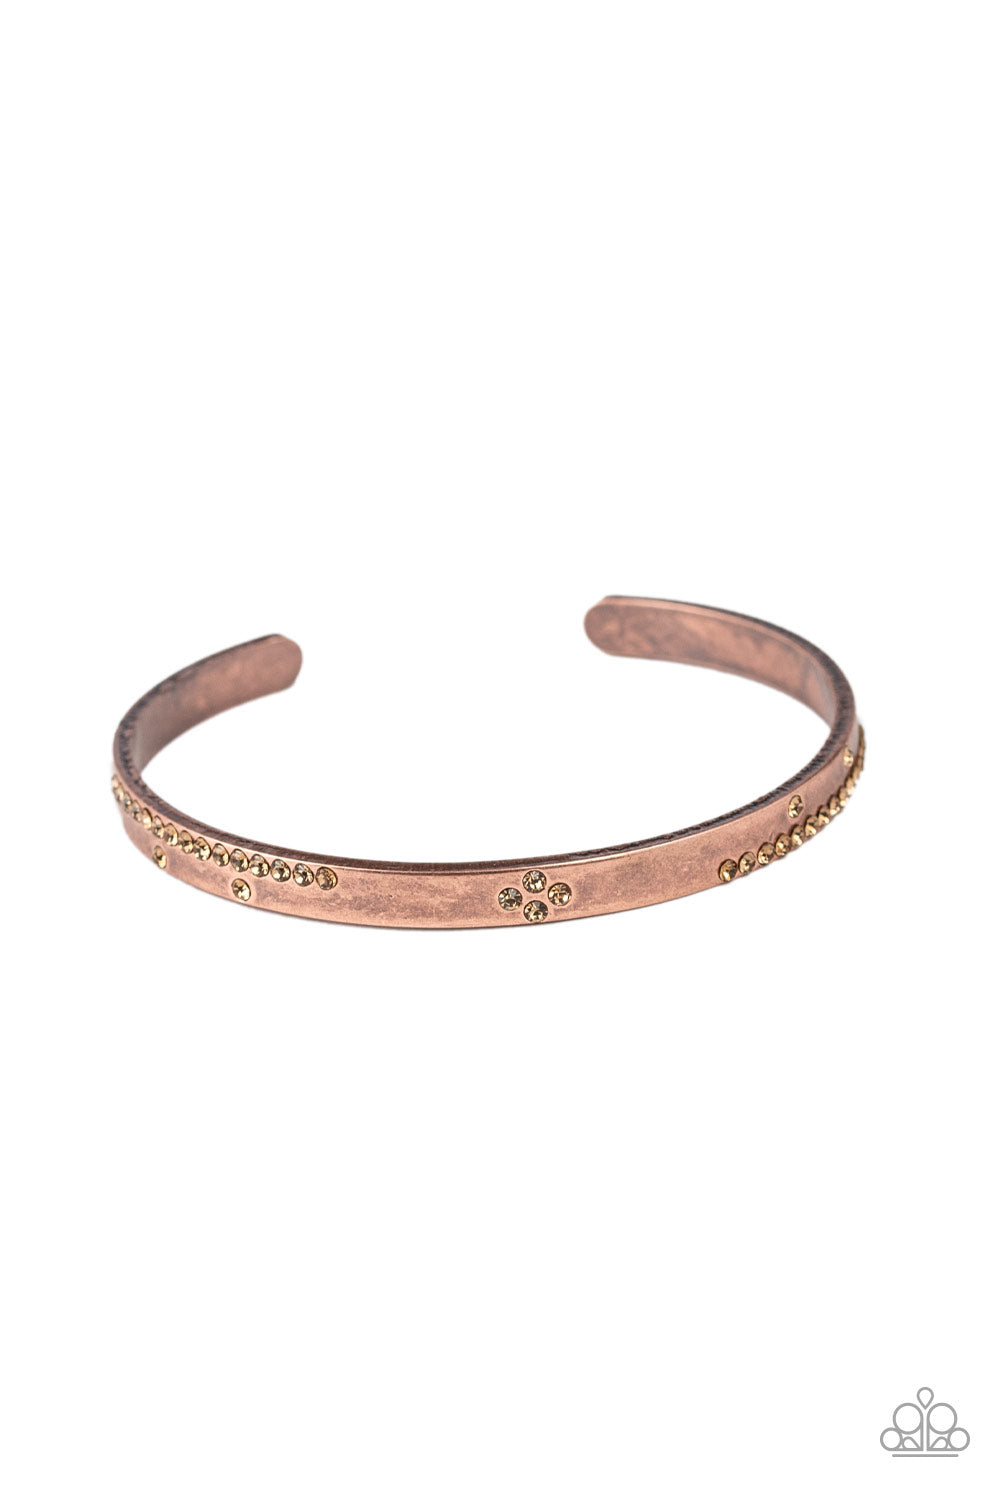 Dainty Dazzle - copper cuff bracelet 813